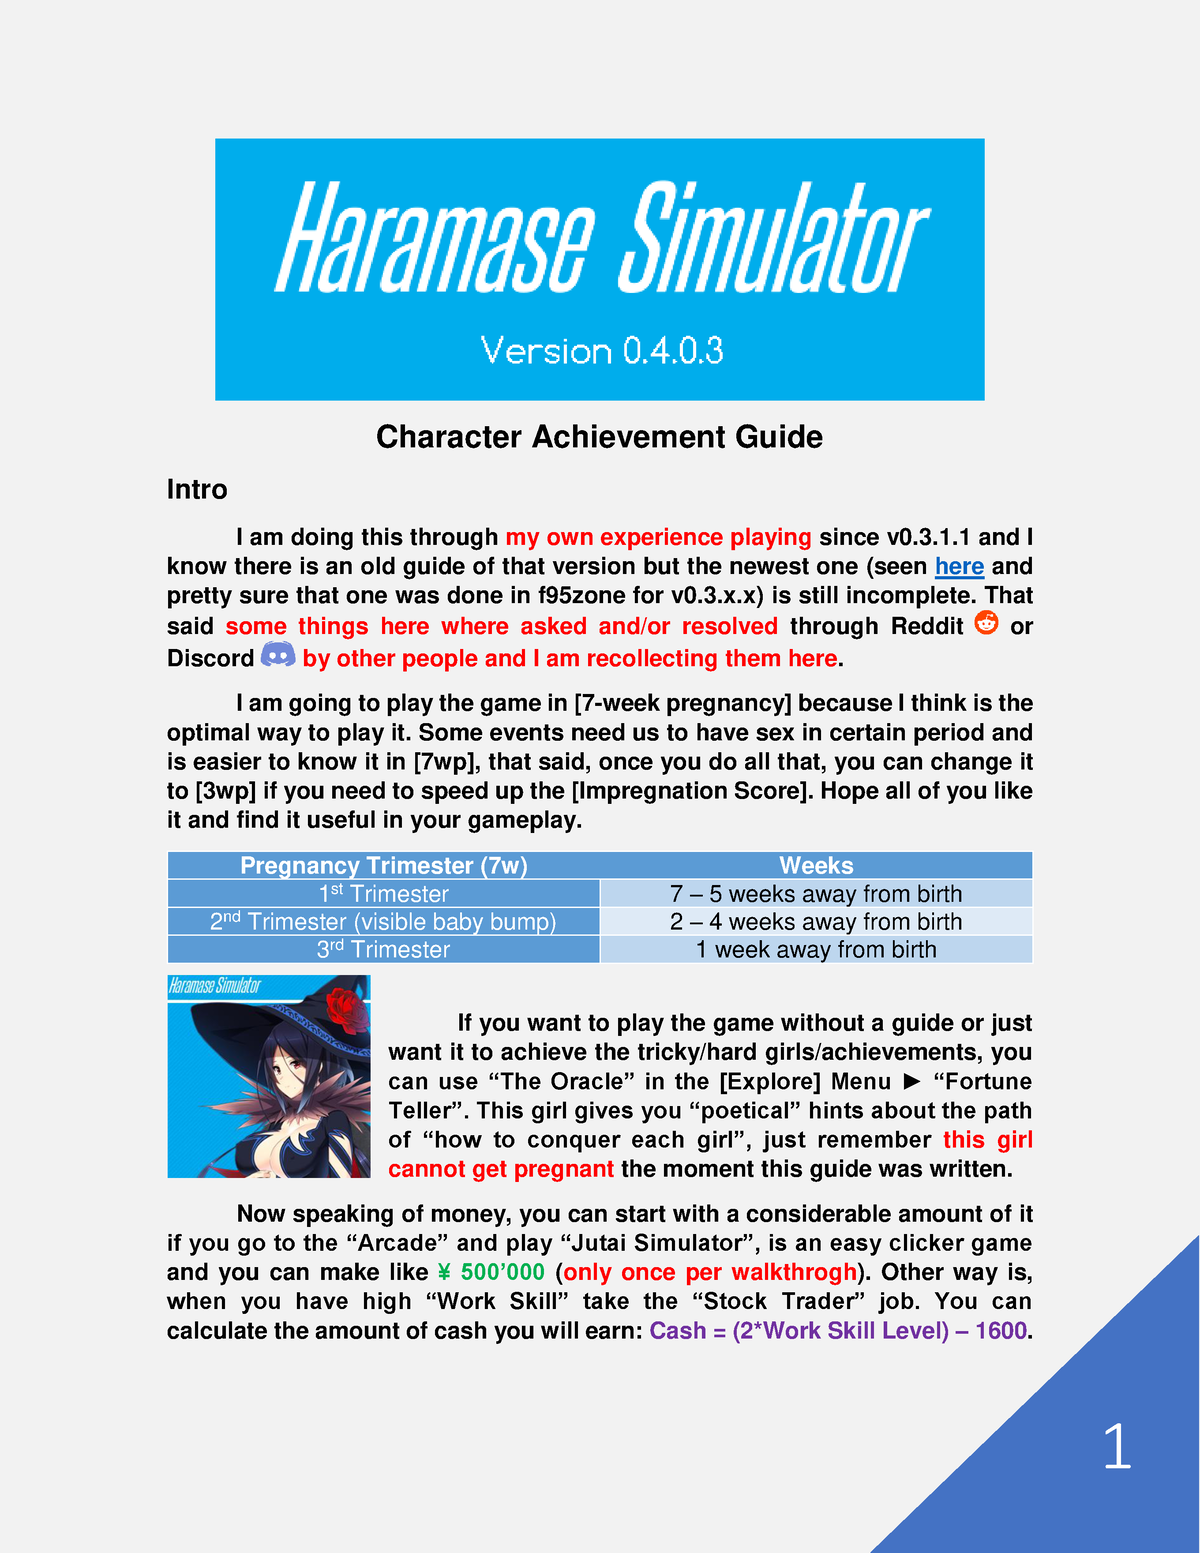 haramase-simulator-character-achievement-guide-for-v0-4-0-3-v1-character-achievement-guide